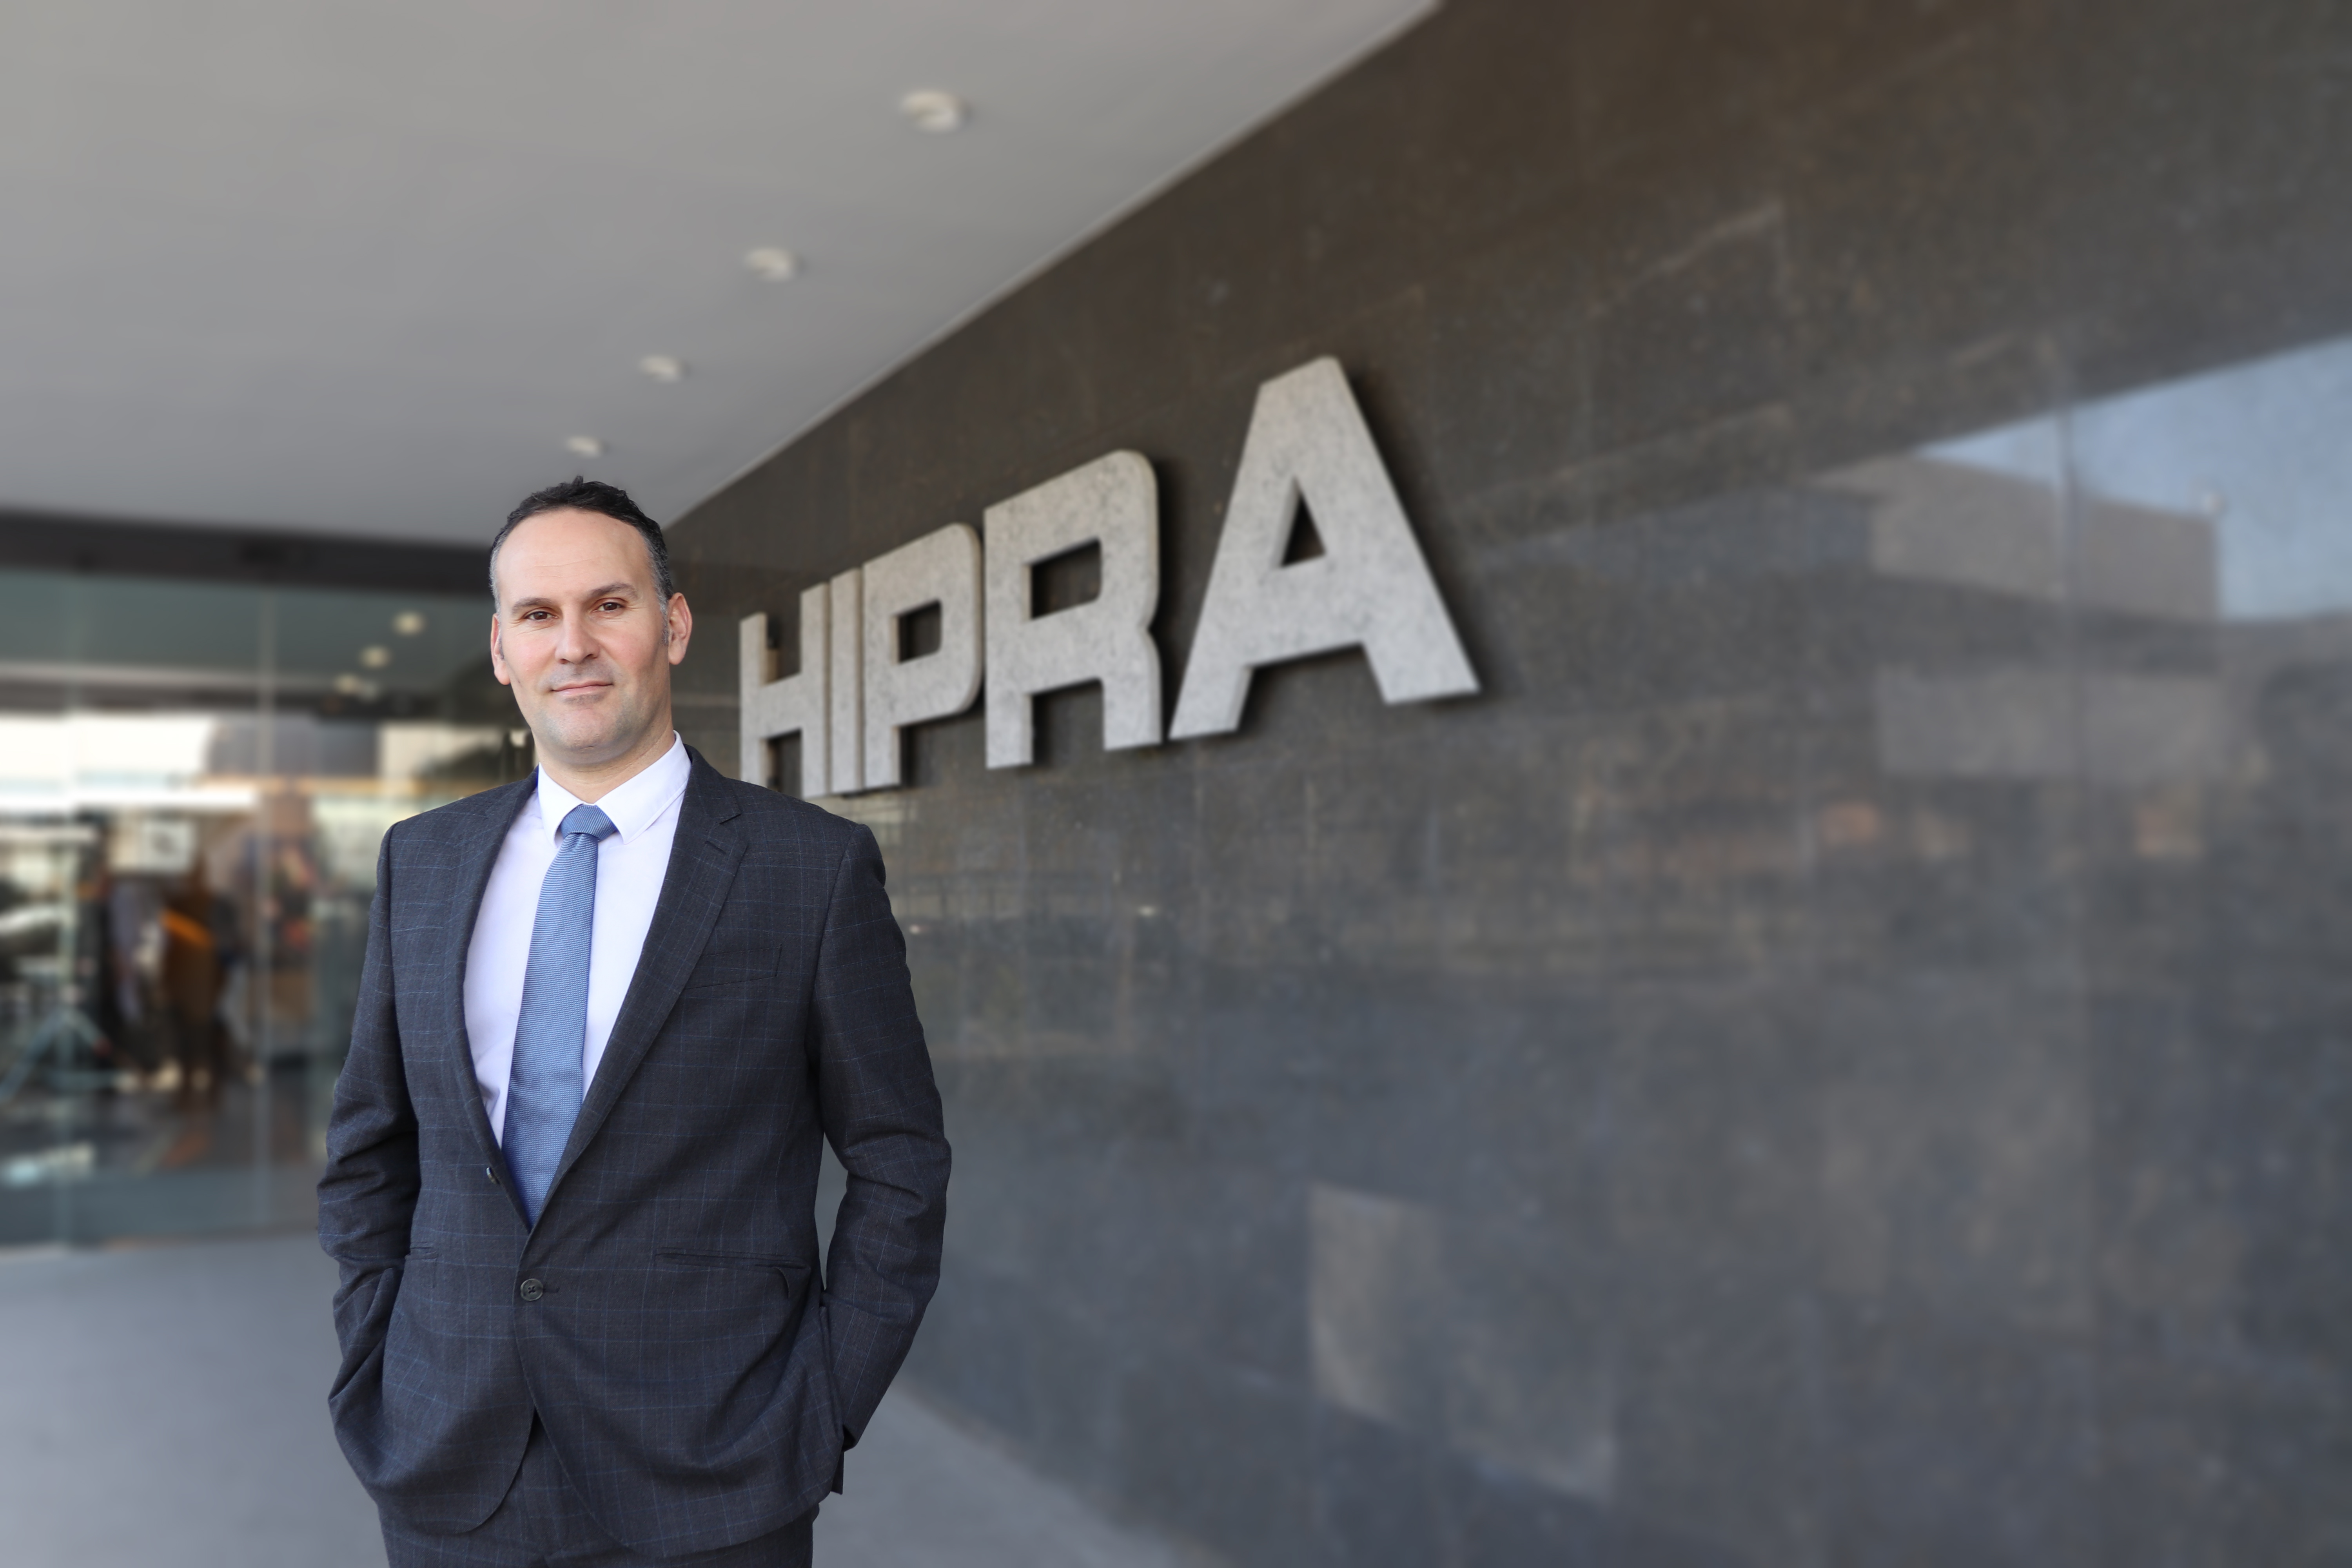 Carles Fàbrega, Marketing Director, HIPRA